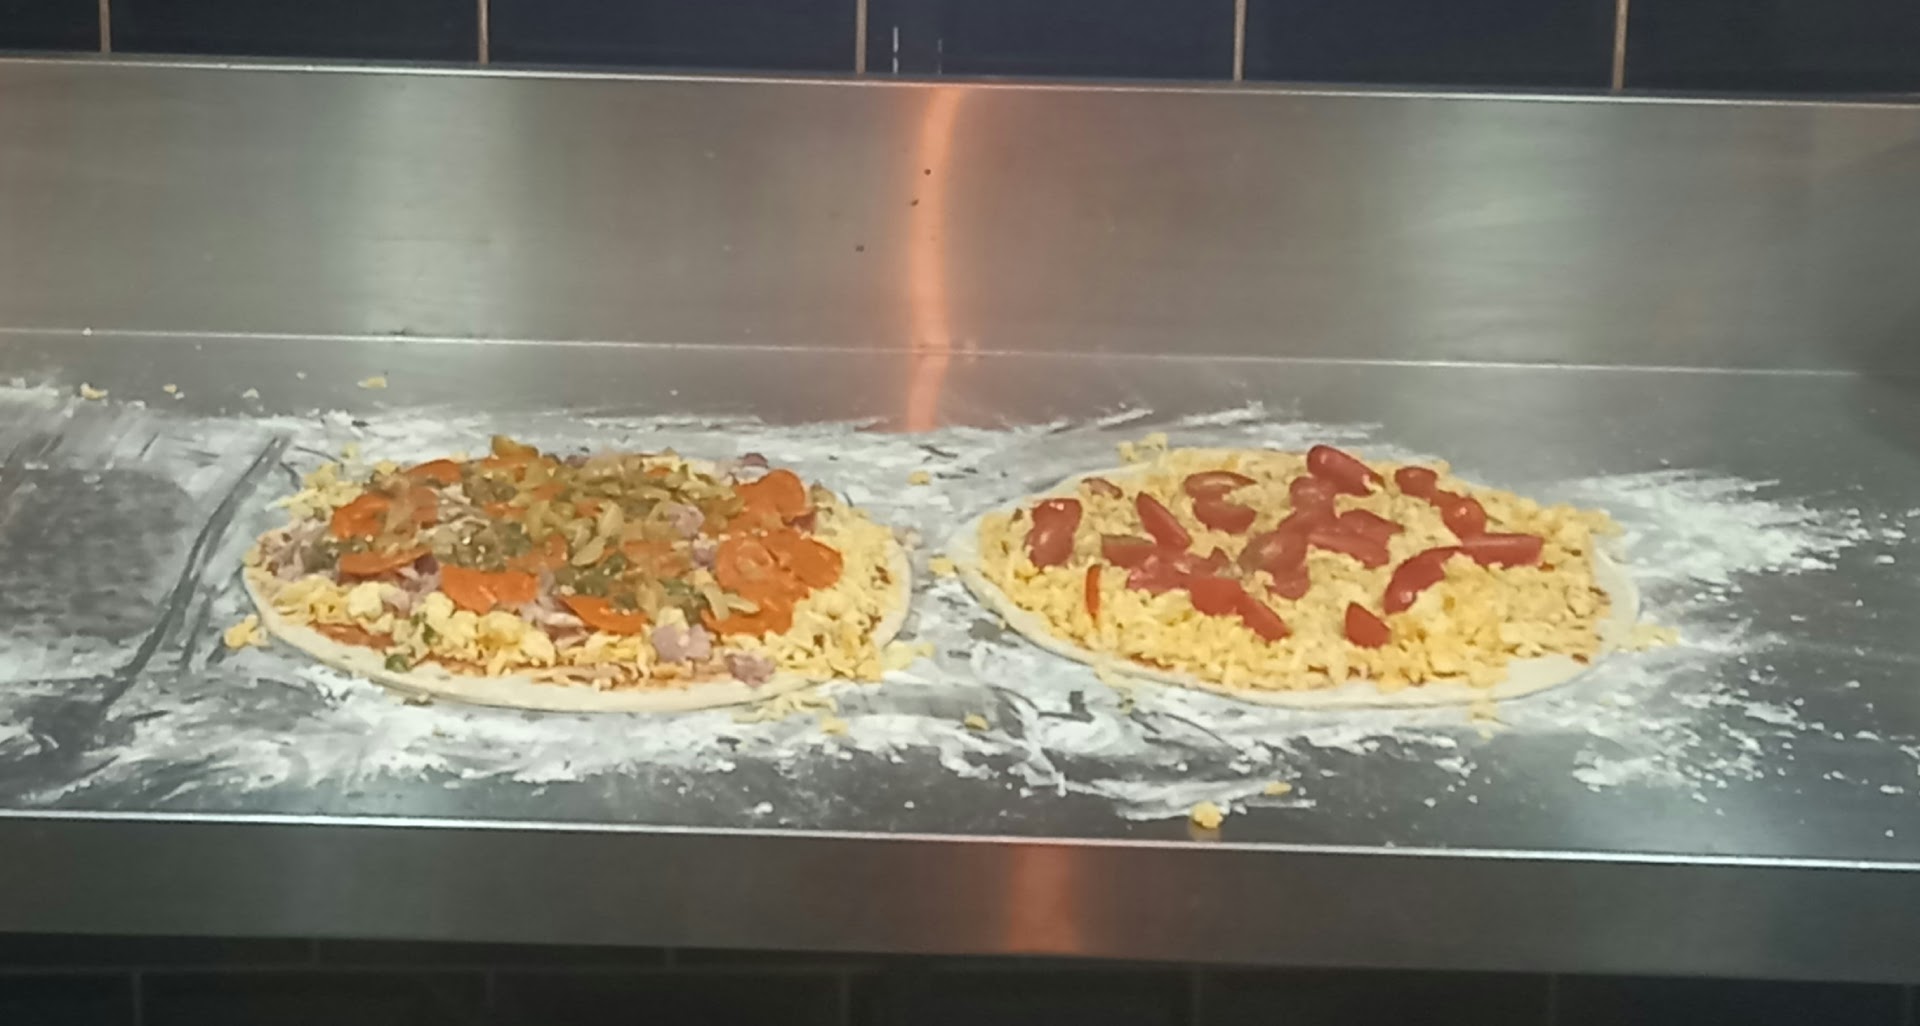 #Pizza